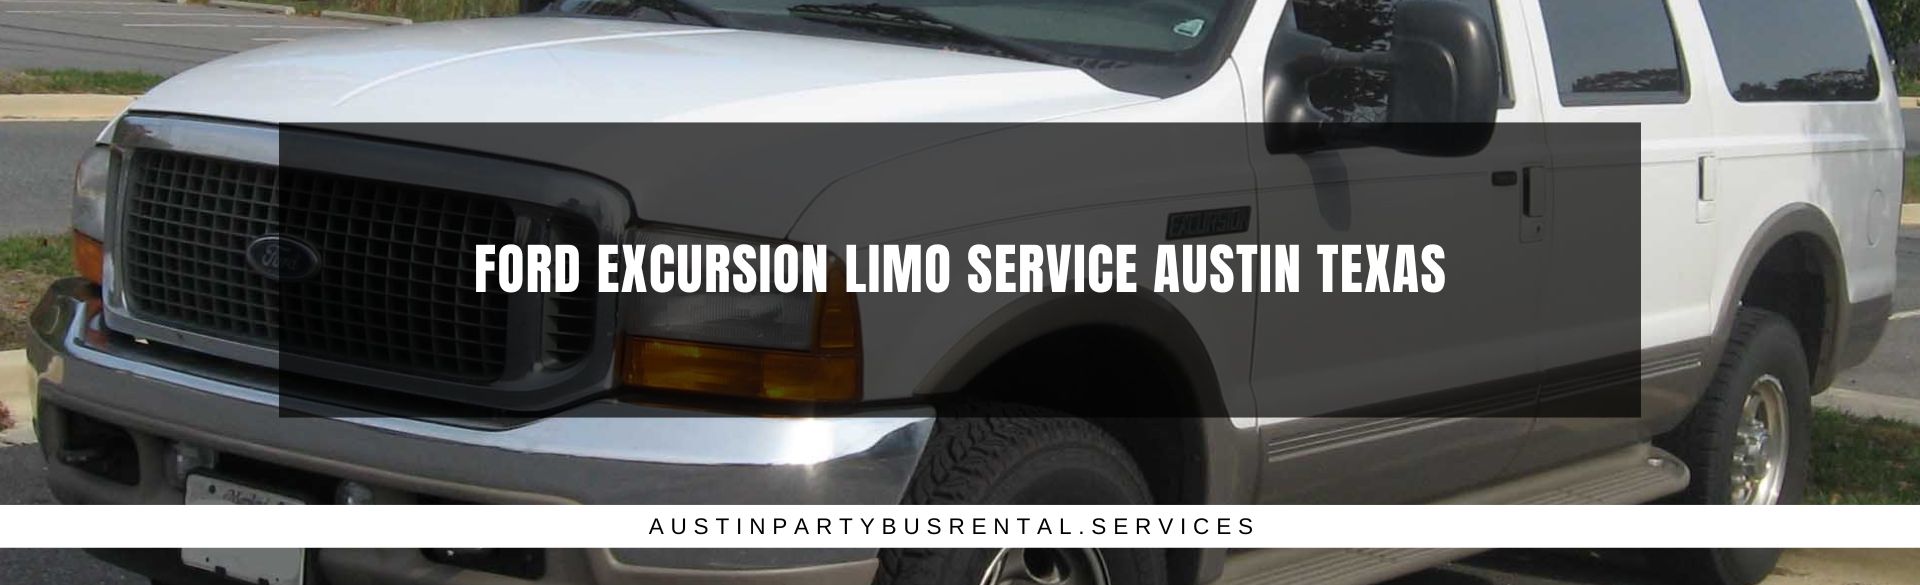 Ford Excursion Limo Service Austin Texas